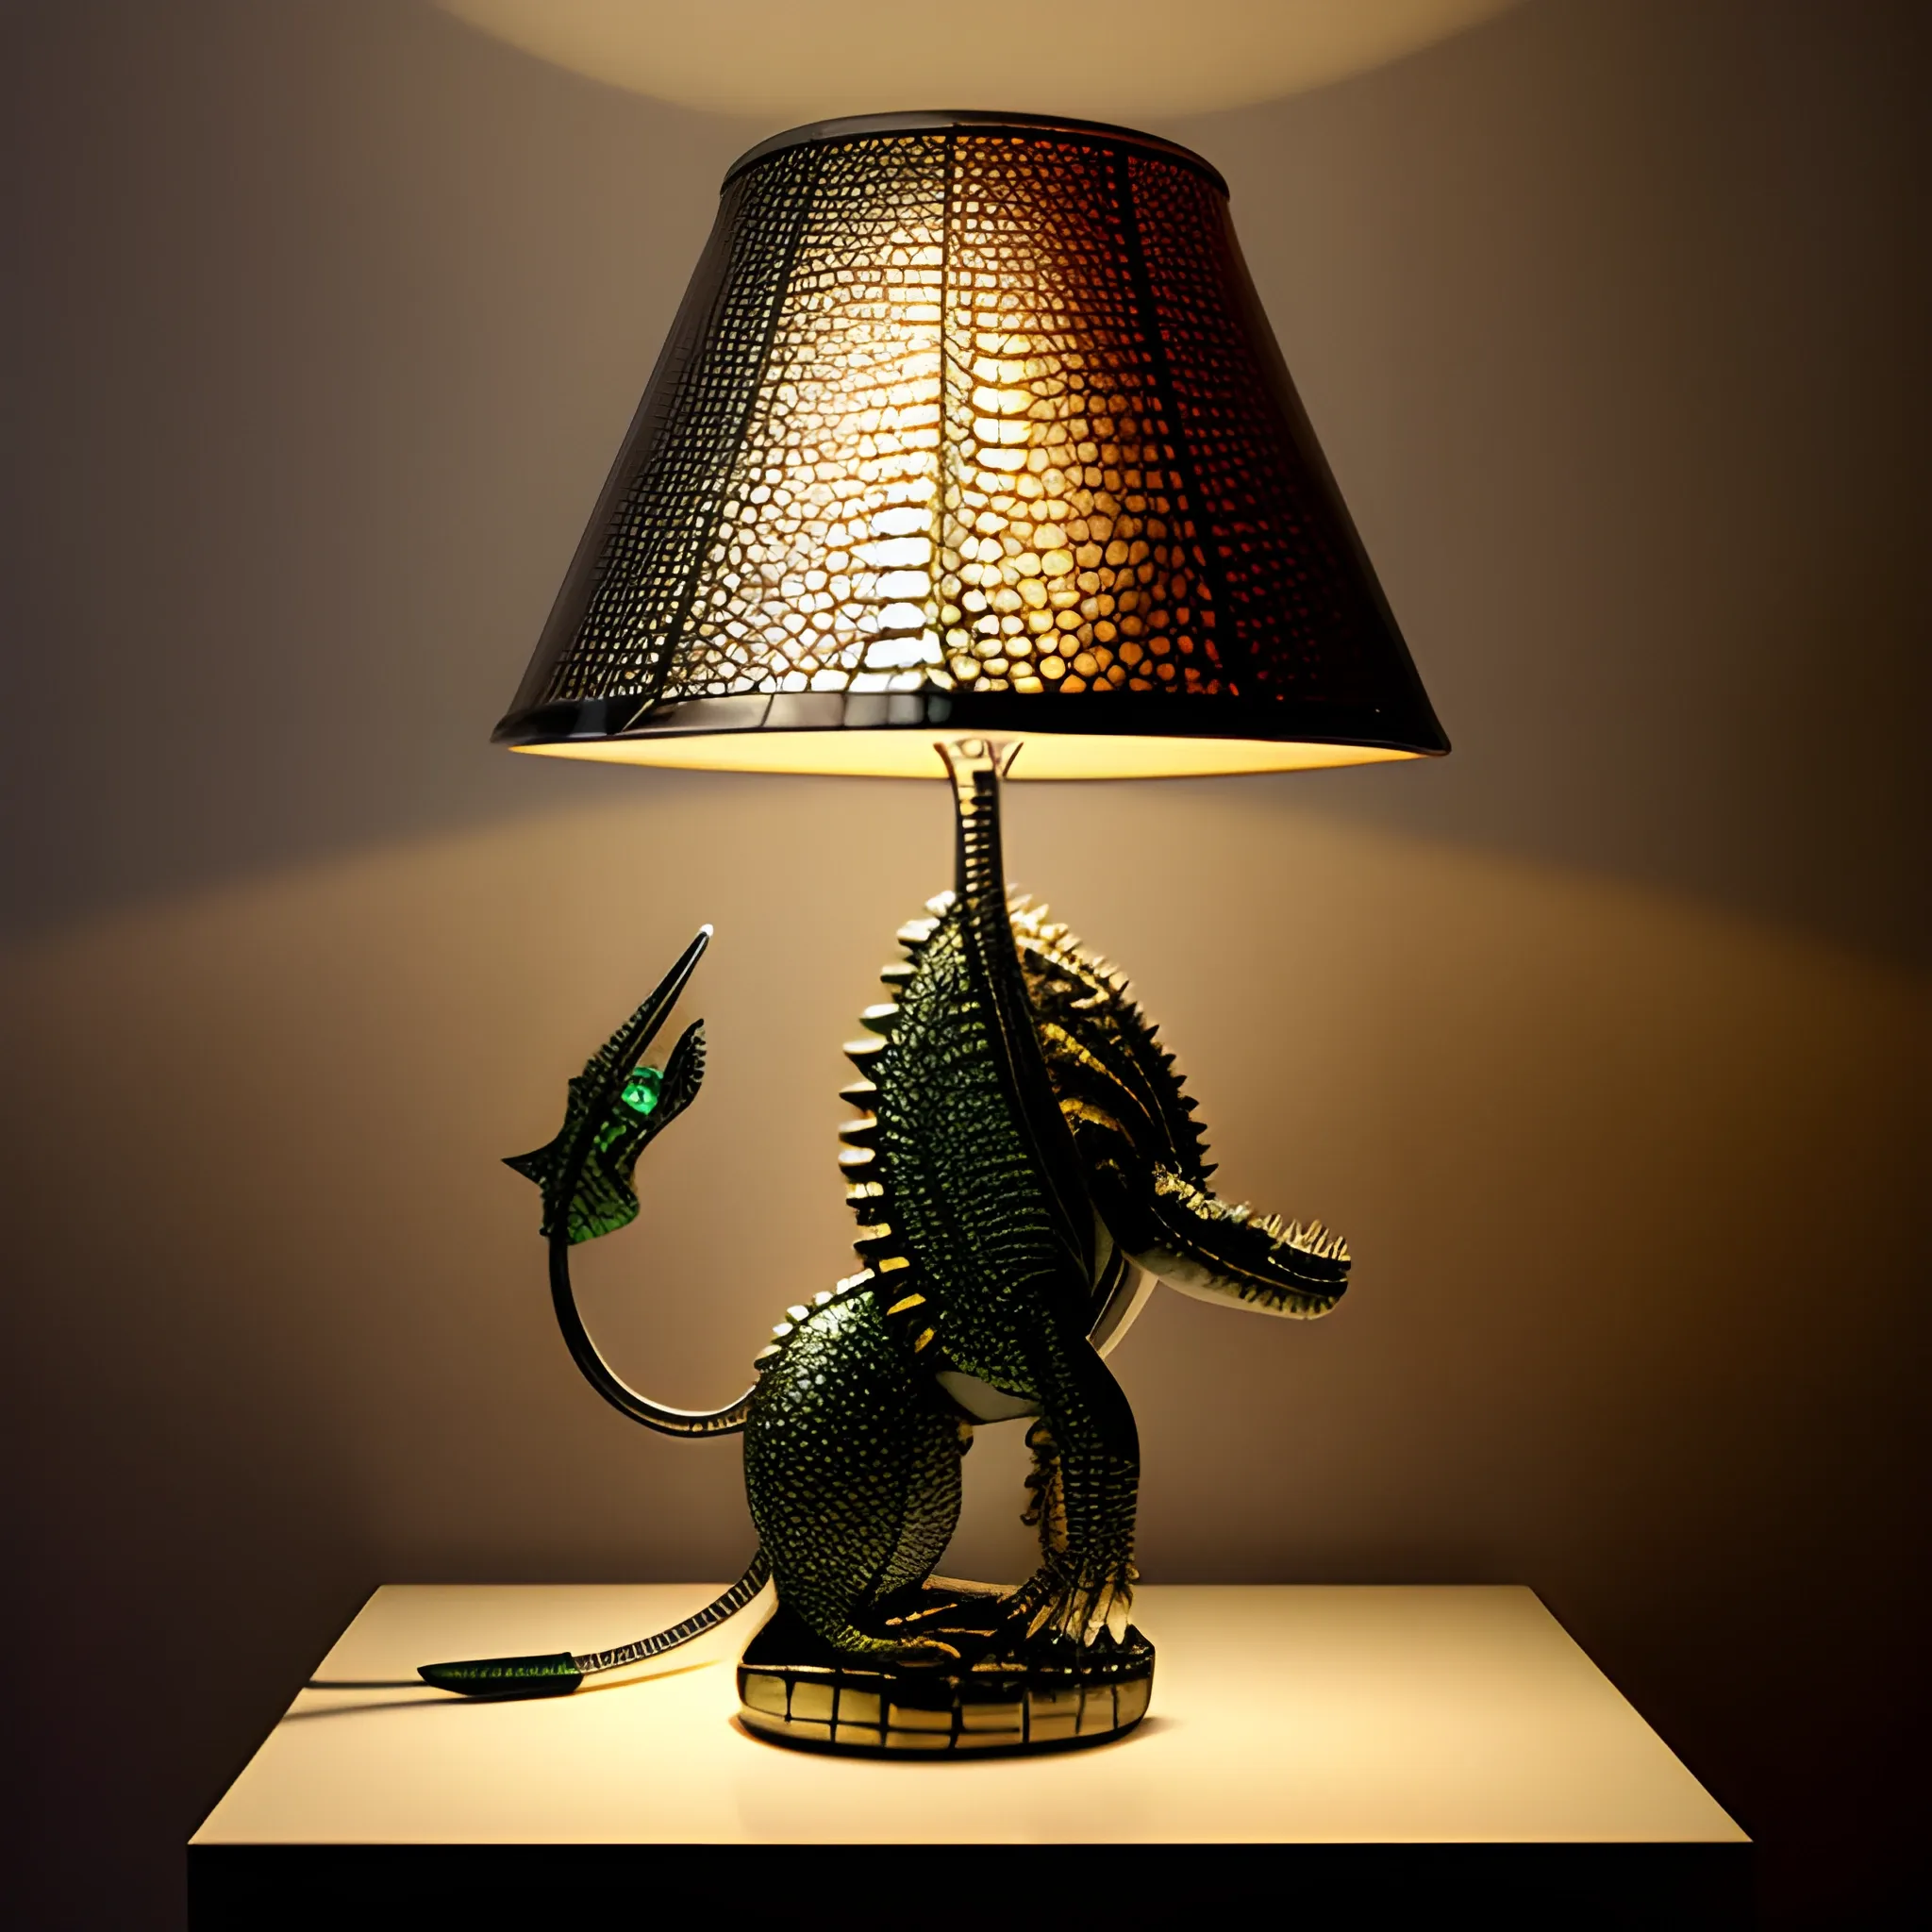 lamp with Liquid metal crocodile  skin  